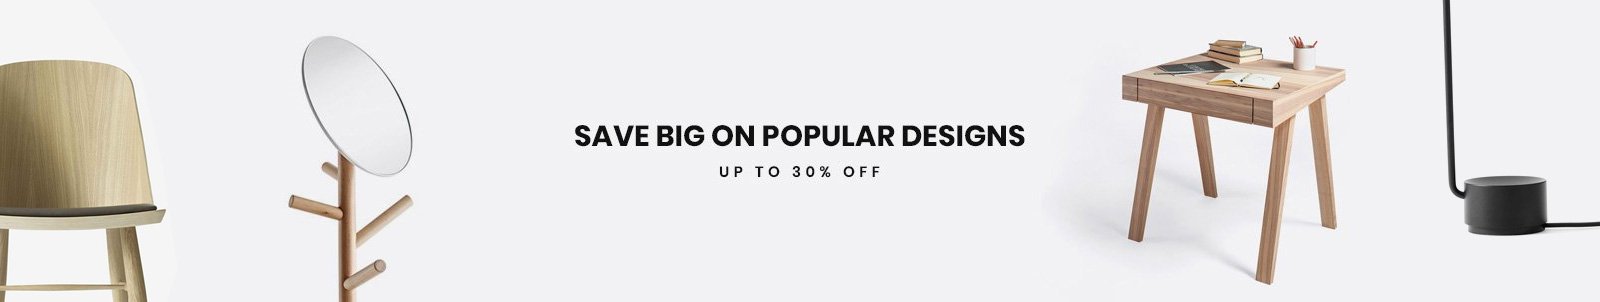 Save Big On Popular Designs